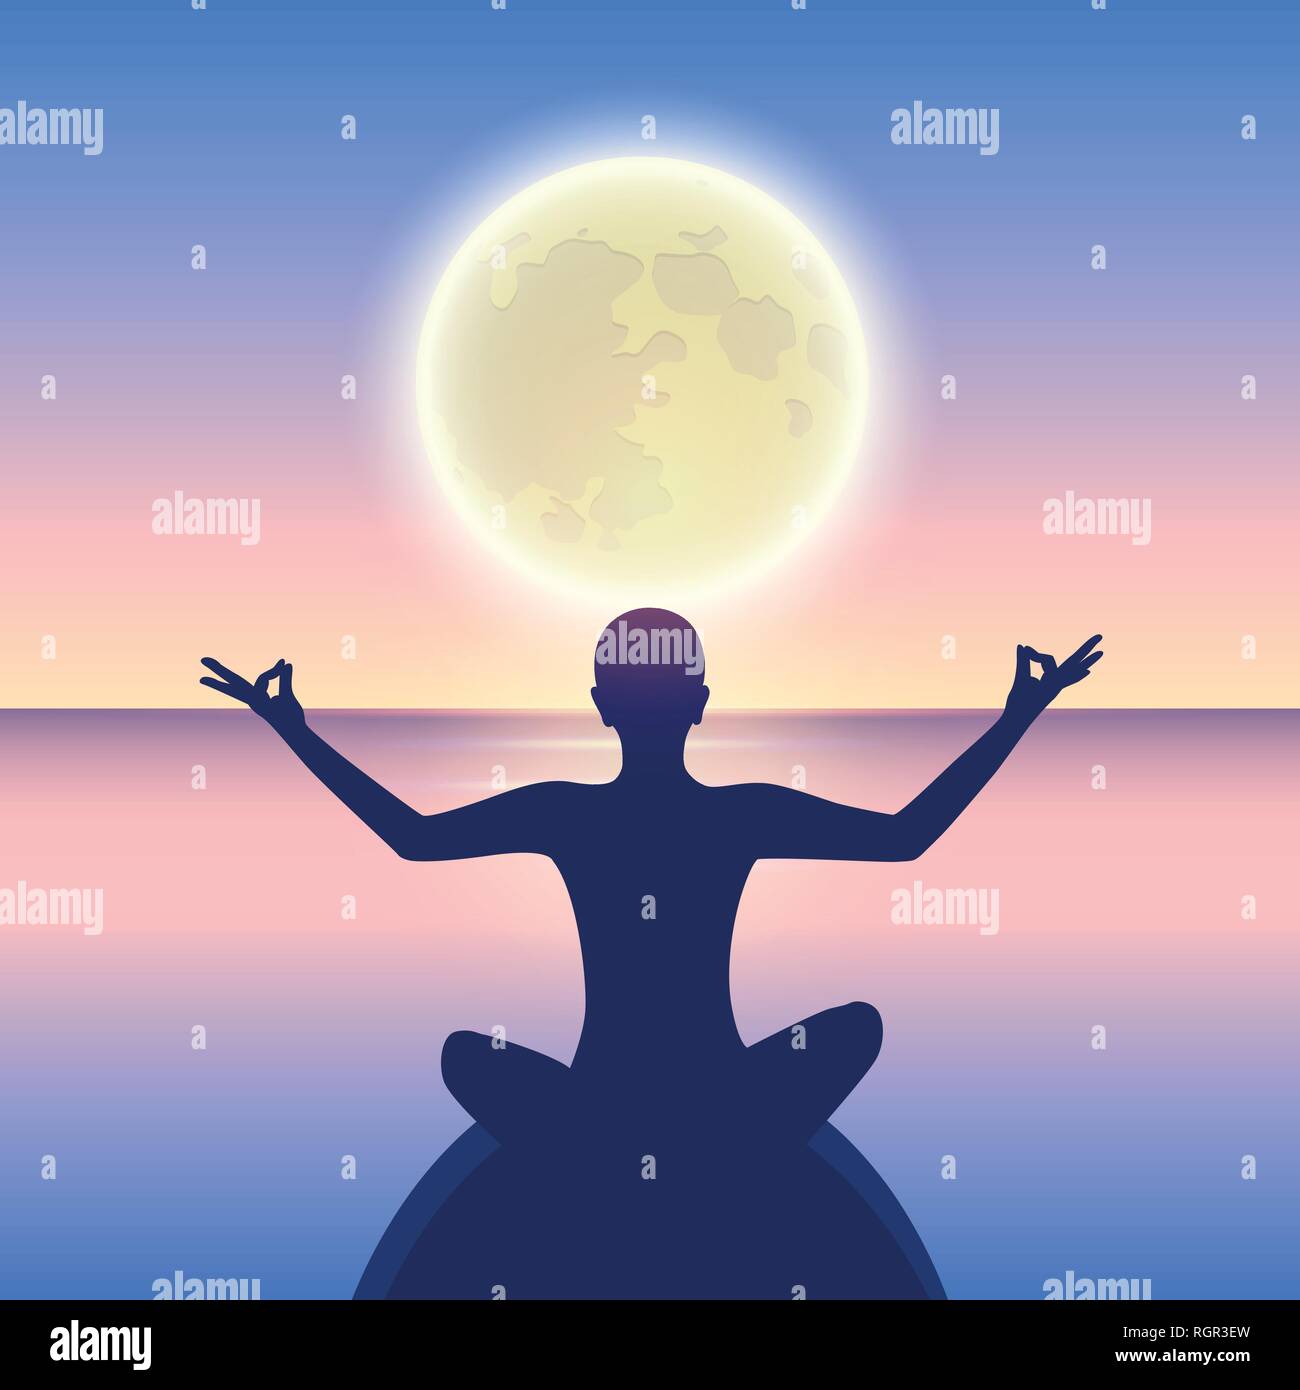 peaceful meditation on a calm sea at moonlight vector illustration EPS10 Stock Vector